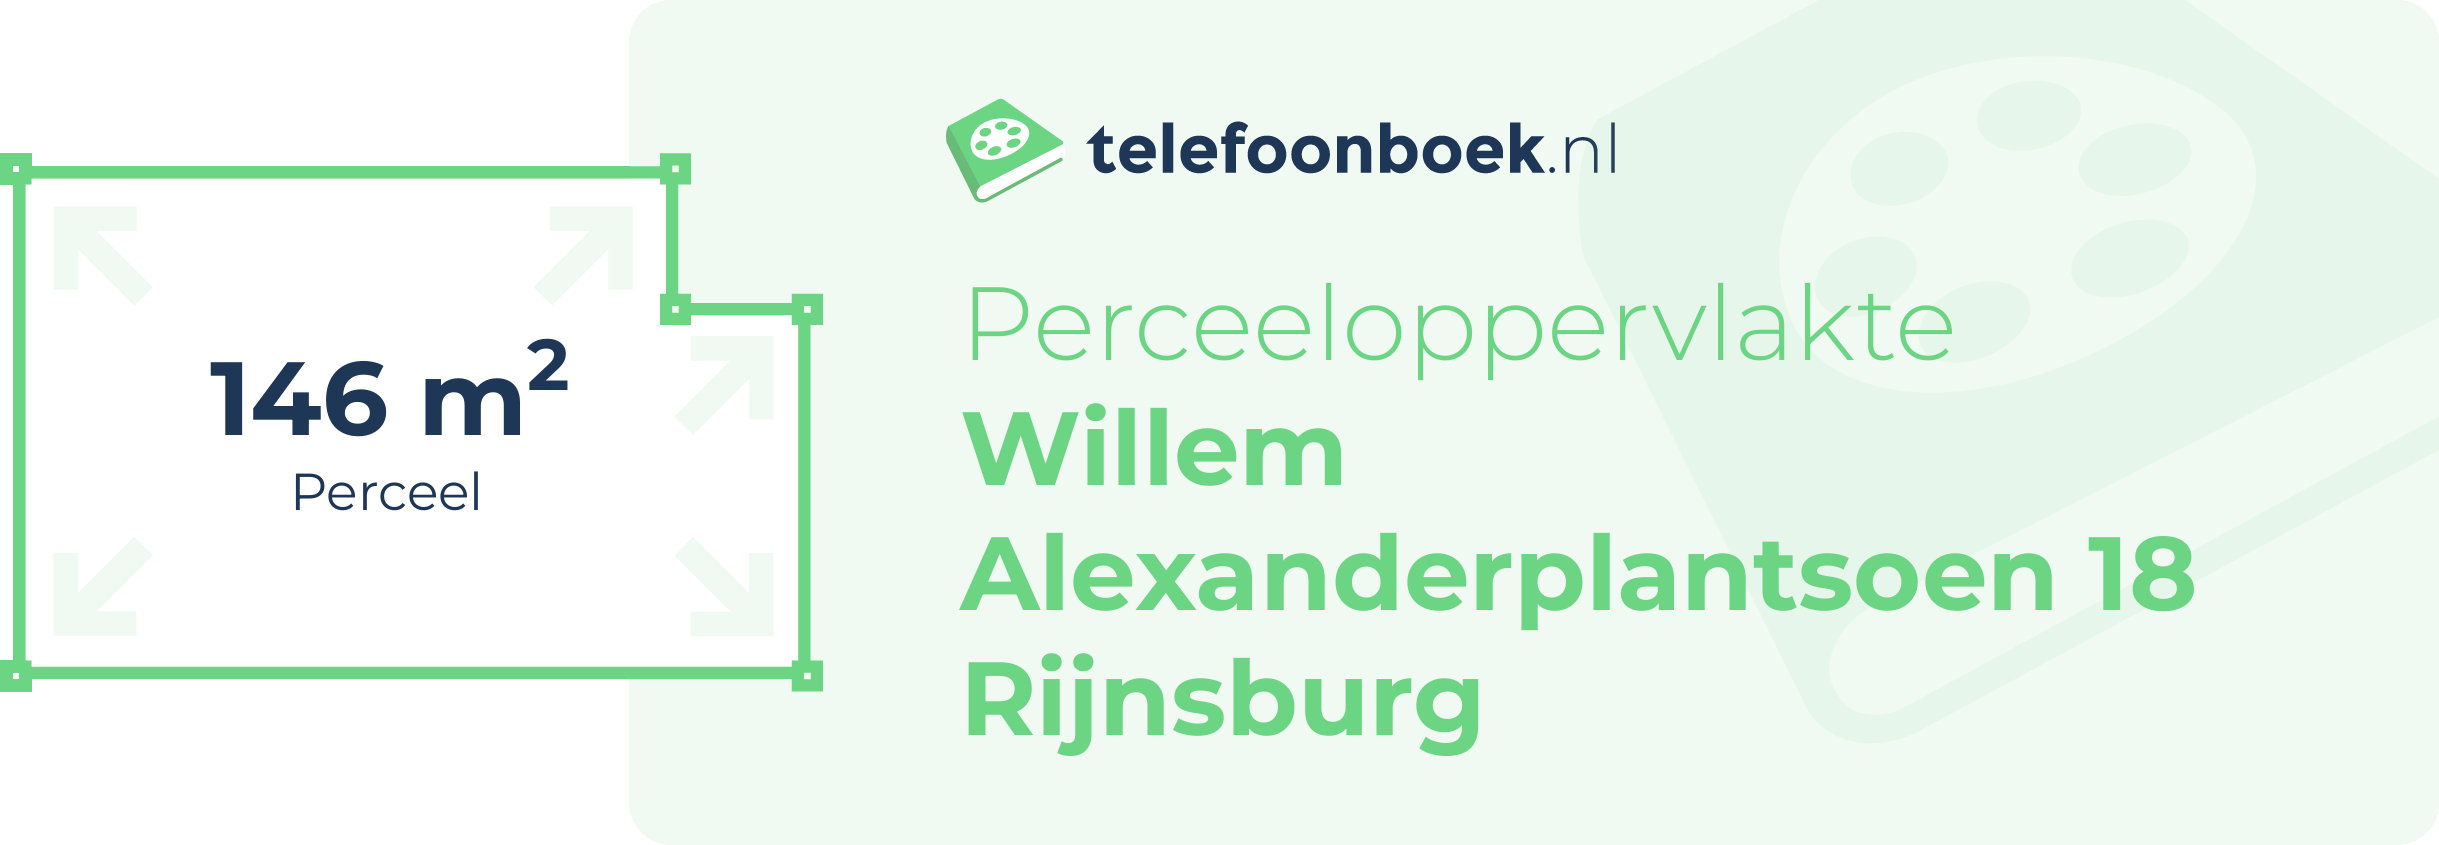 Perceeloppervlakte Willem Alexanderplantsoen 18 Rijnsburg